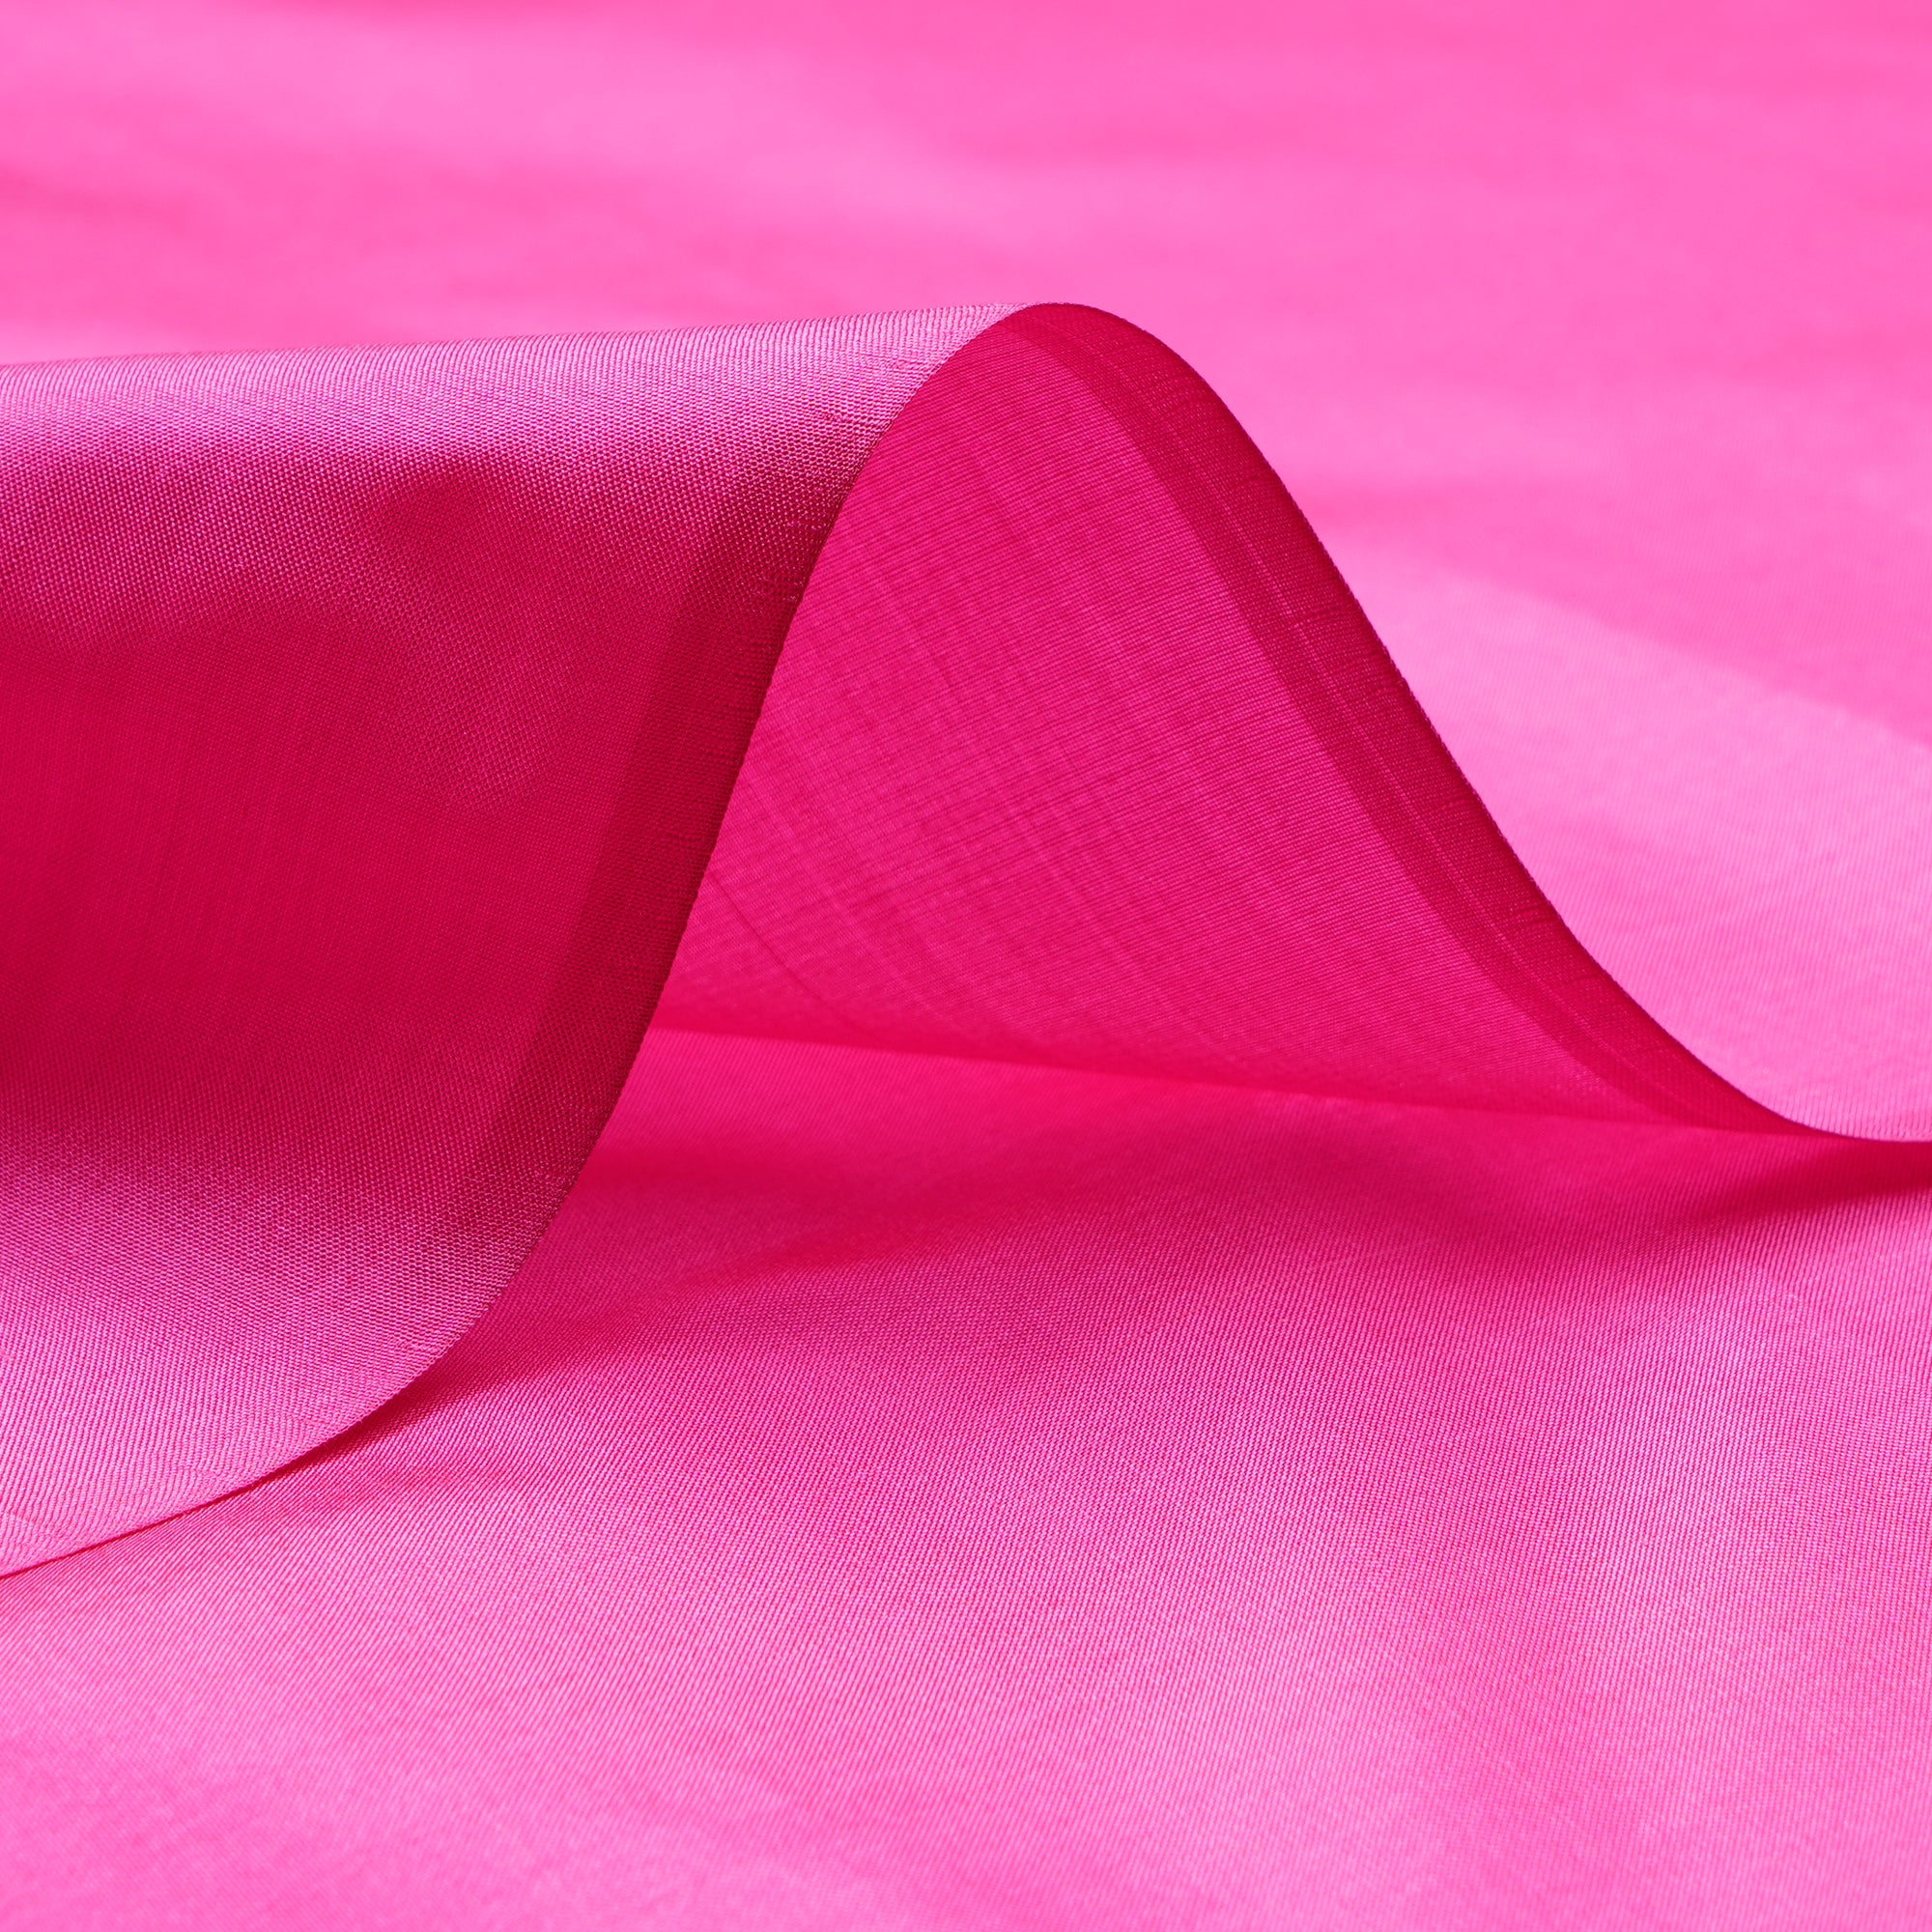 Hot Pink Color Bangalore Silk Fabric